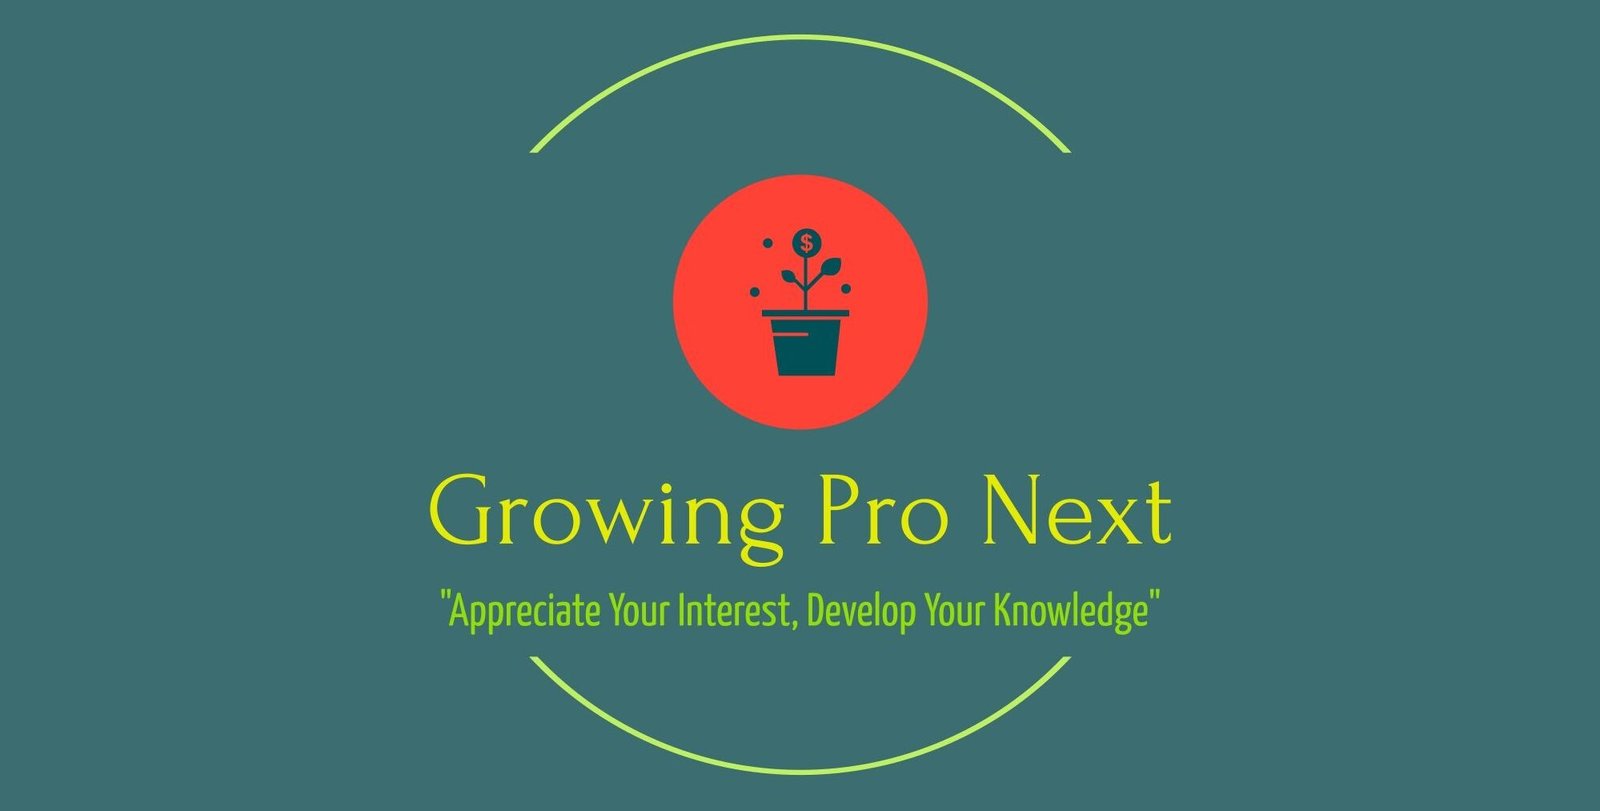 Growing Pro Next